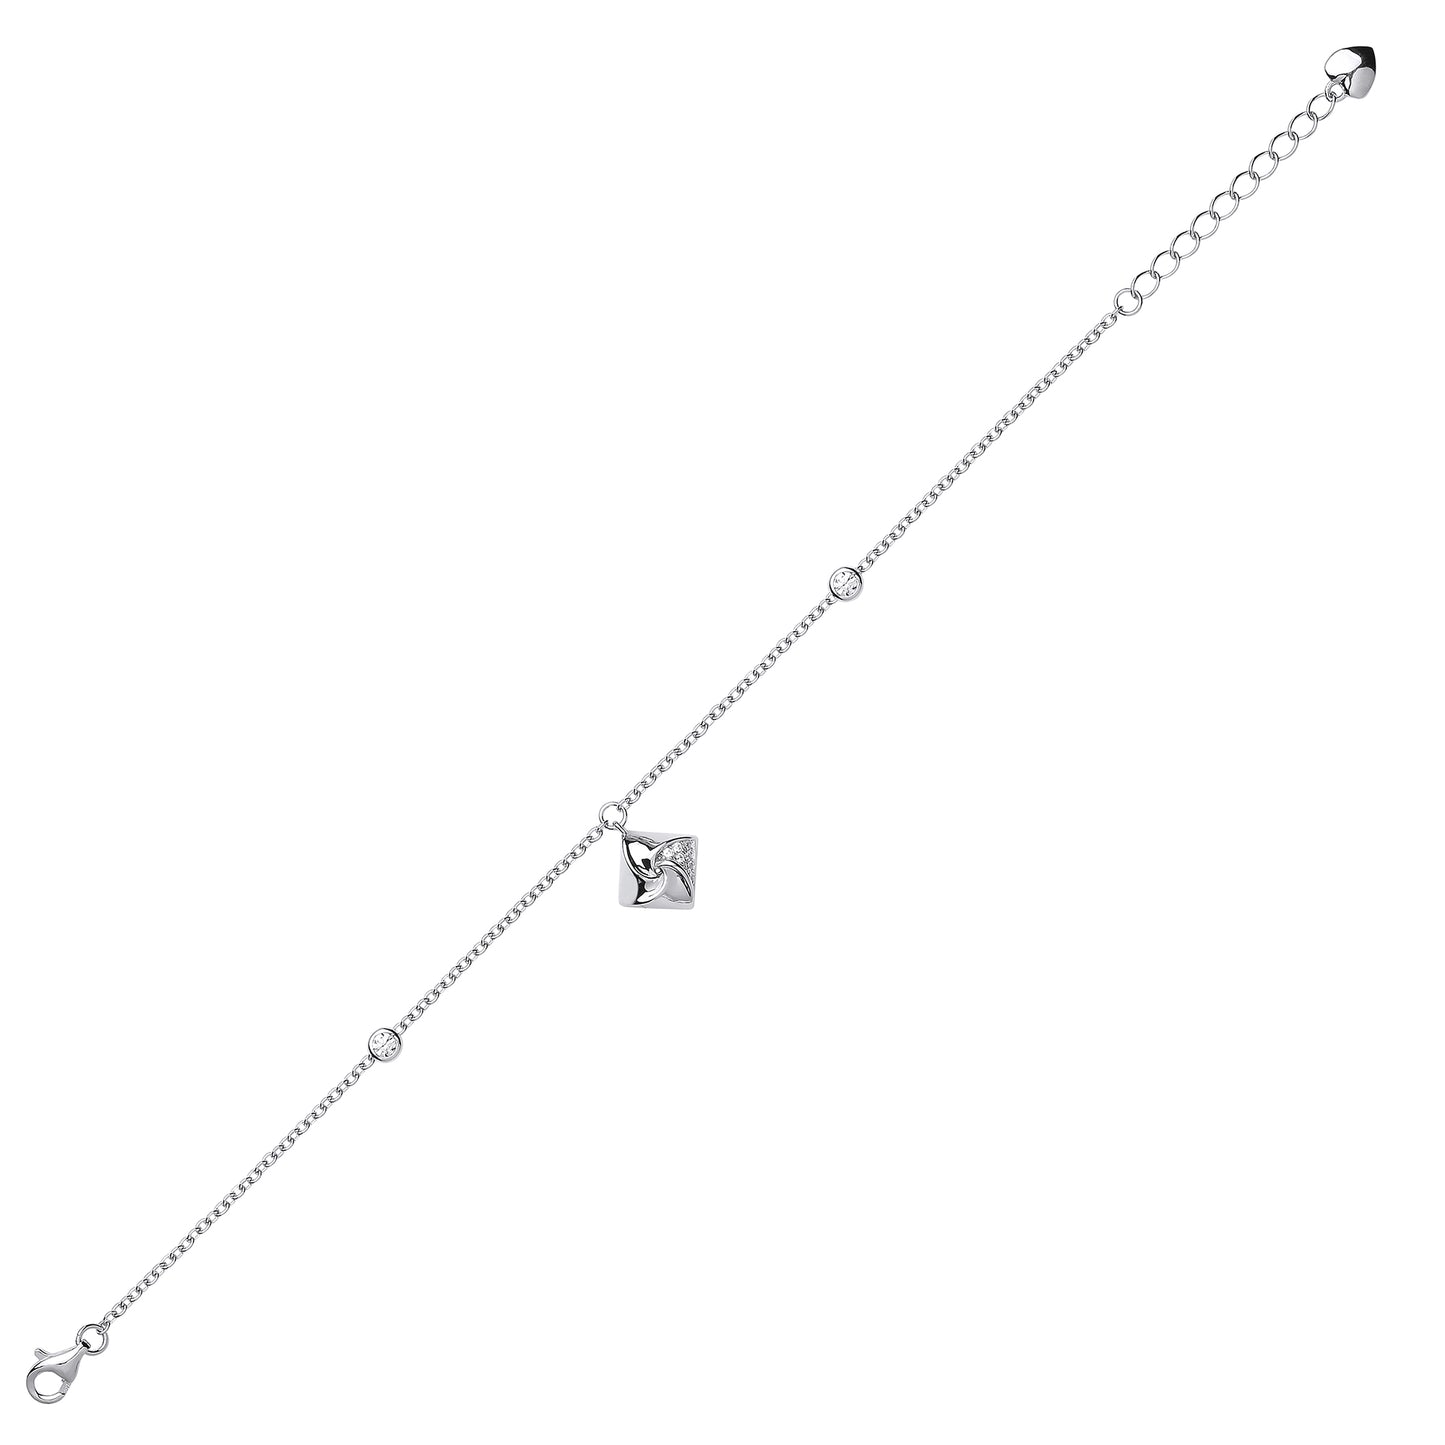 Silver  CZ Swirling Square Charm Bracelet 6.5 inch - GVB429